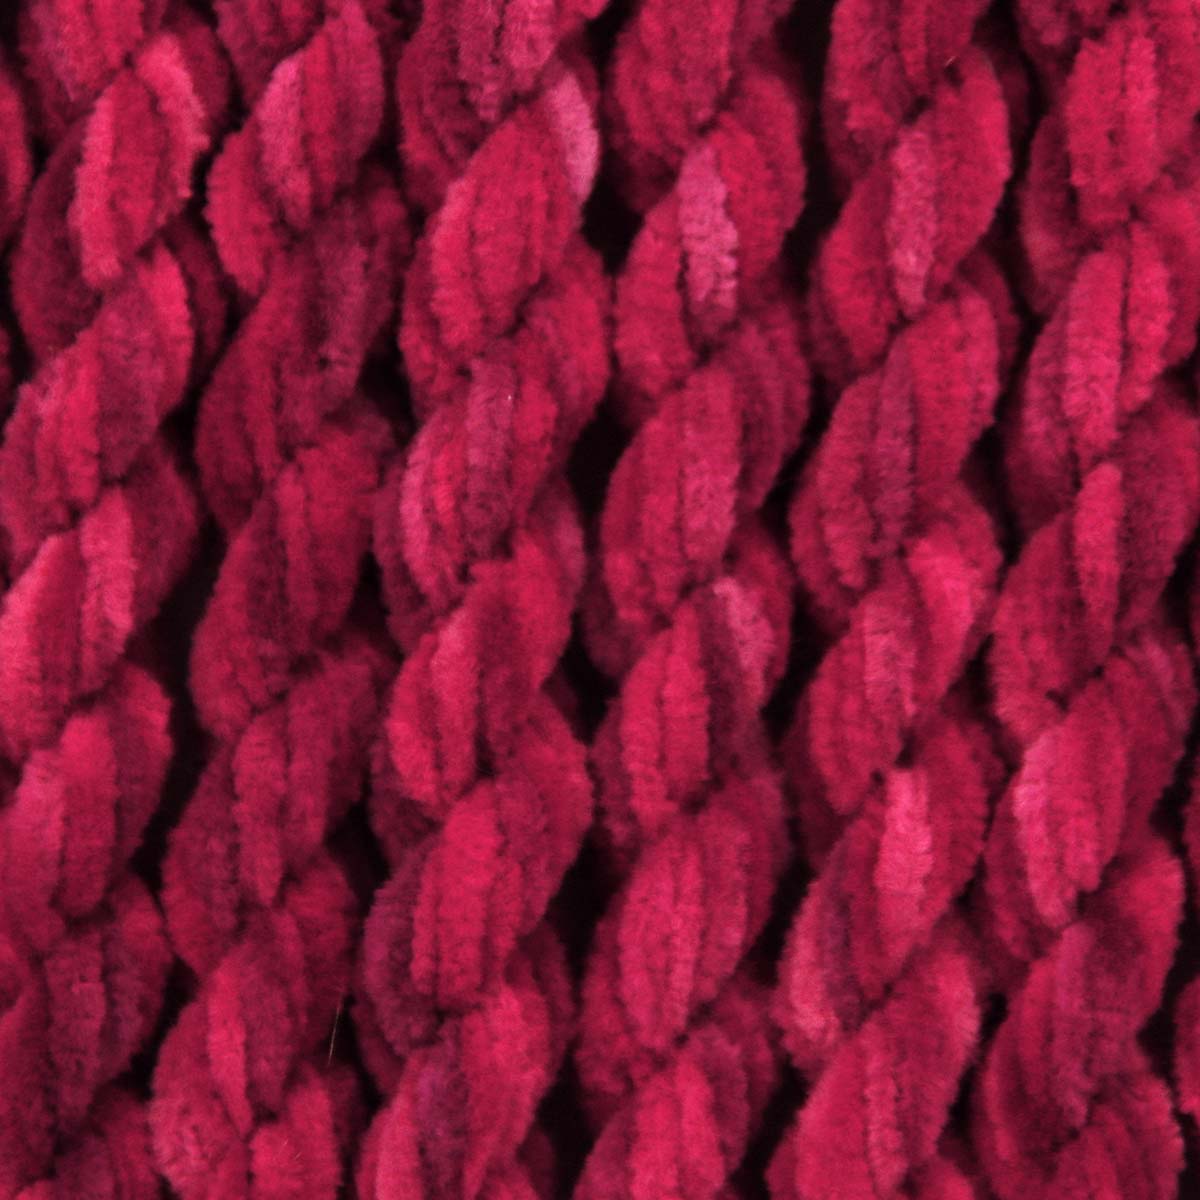 www.colourstreams.com.au Colour Streams Hand Dyed Chenille Threads Slow Stitch Embroidery Textile Arts Fibre DL 63 Cherry Kiss Reds Purples